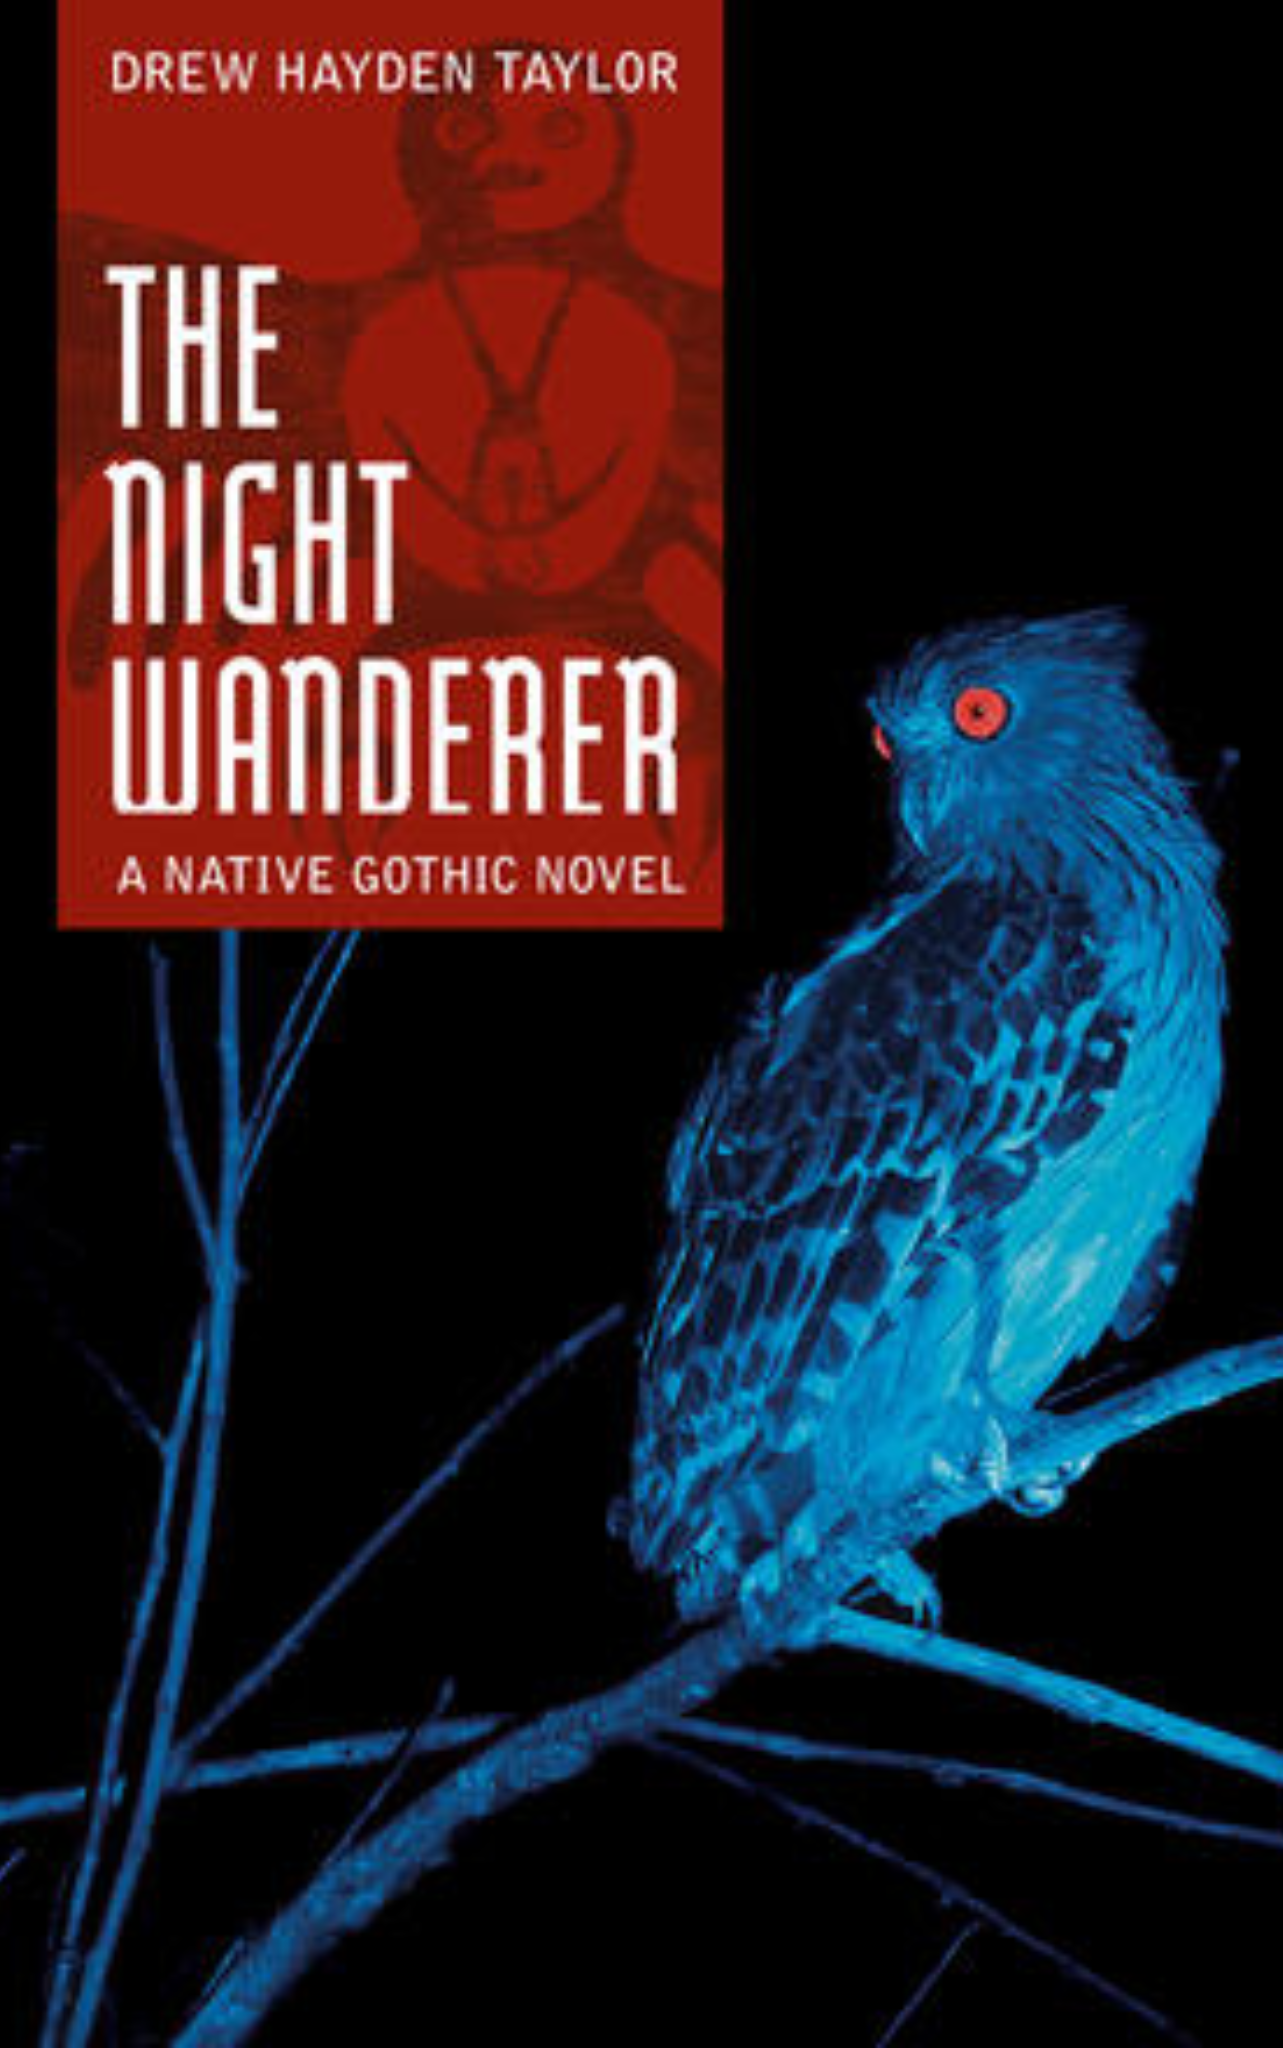 The Night wanderer